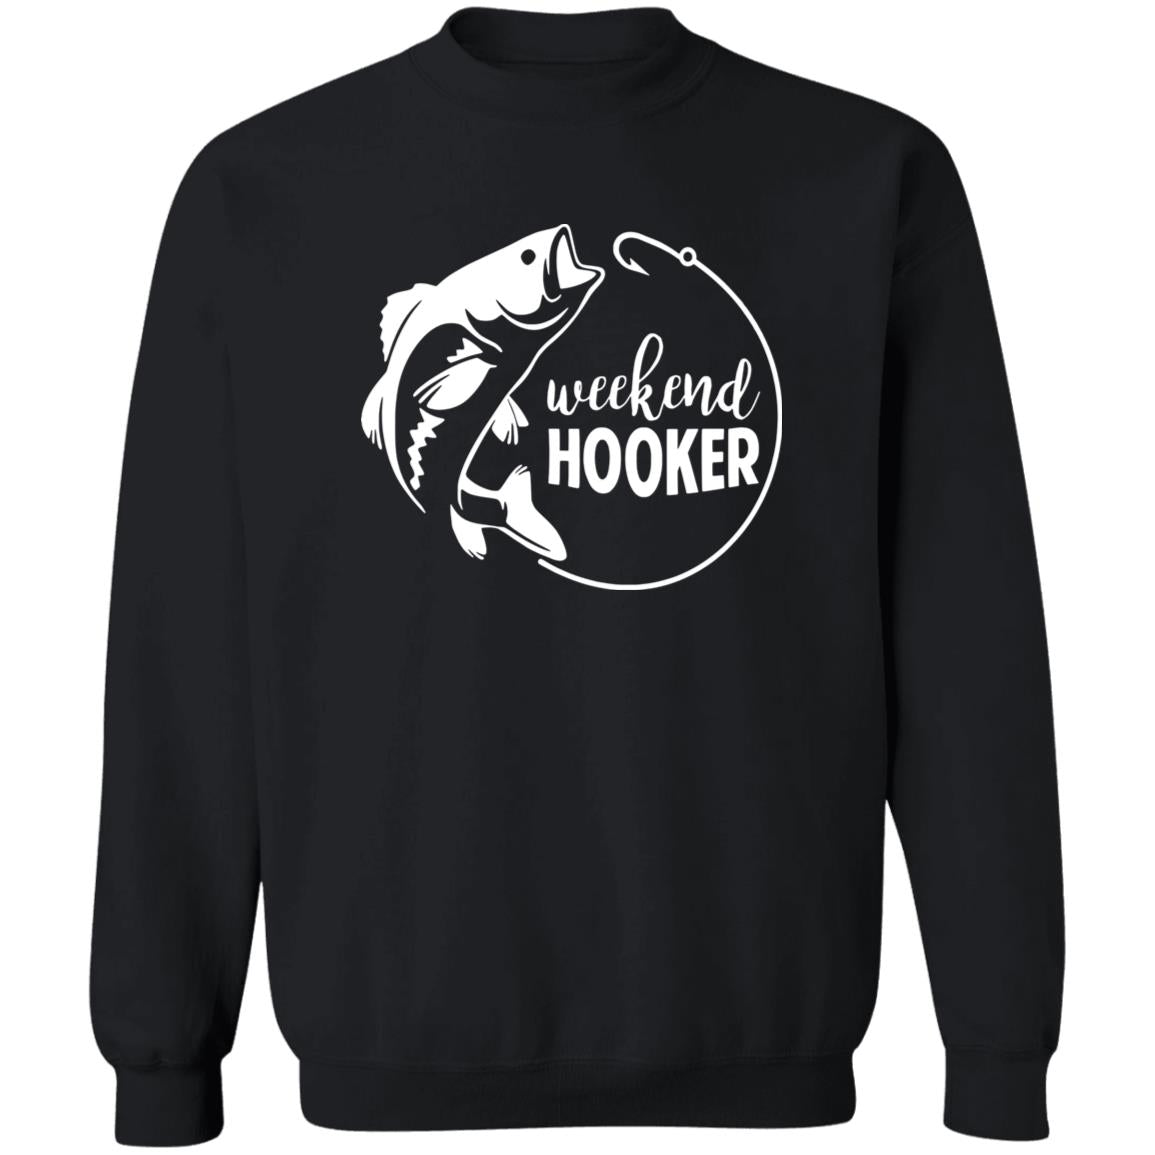 ***2 SIDED***  HRCL FL - Weekend Hooker - 2 Sided G180 Crewneck Pullover Sweatshirt